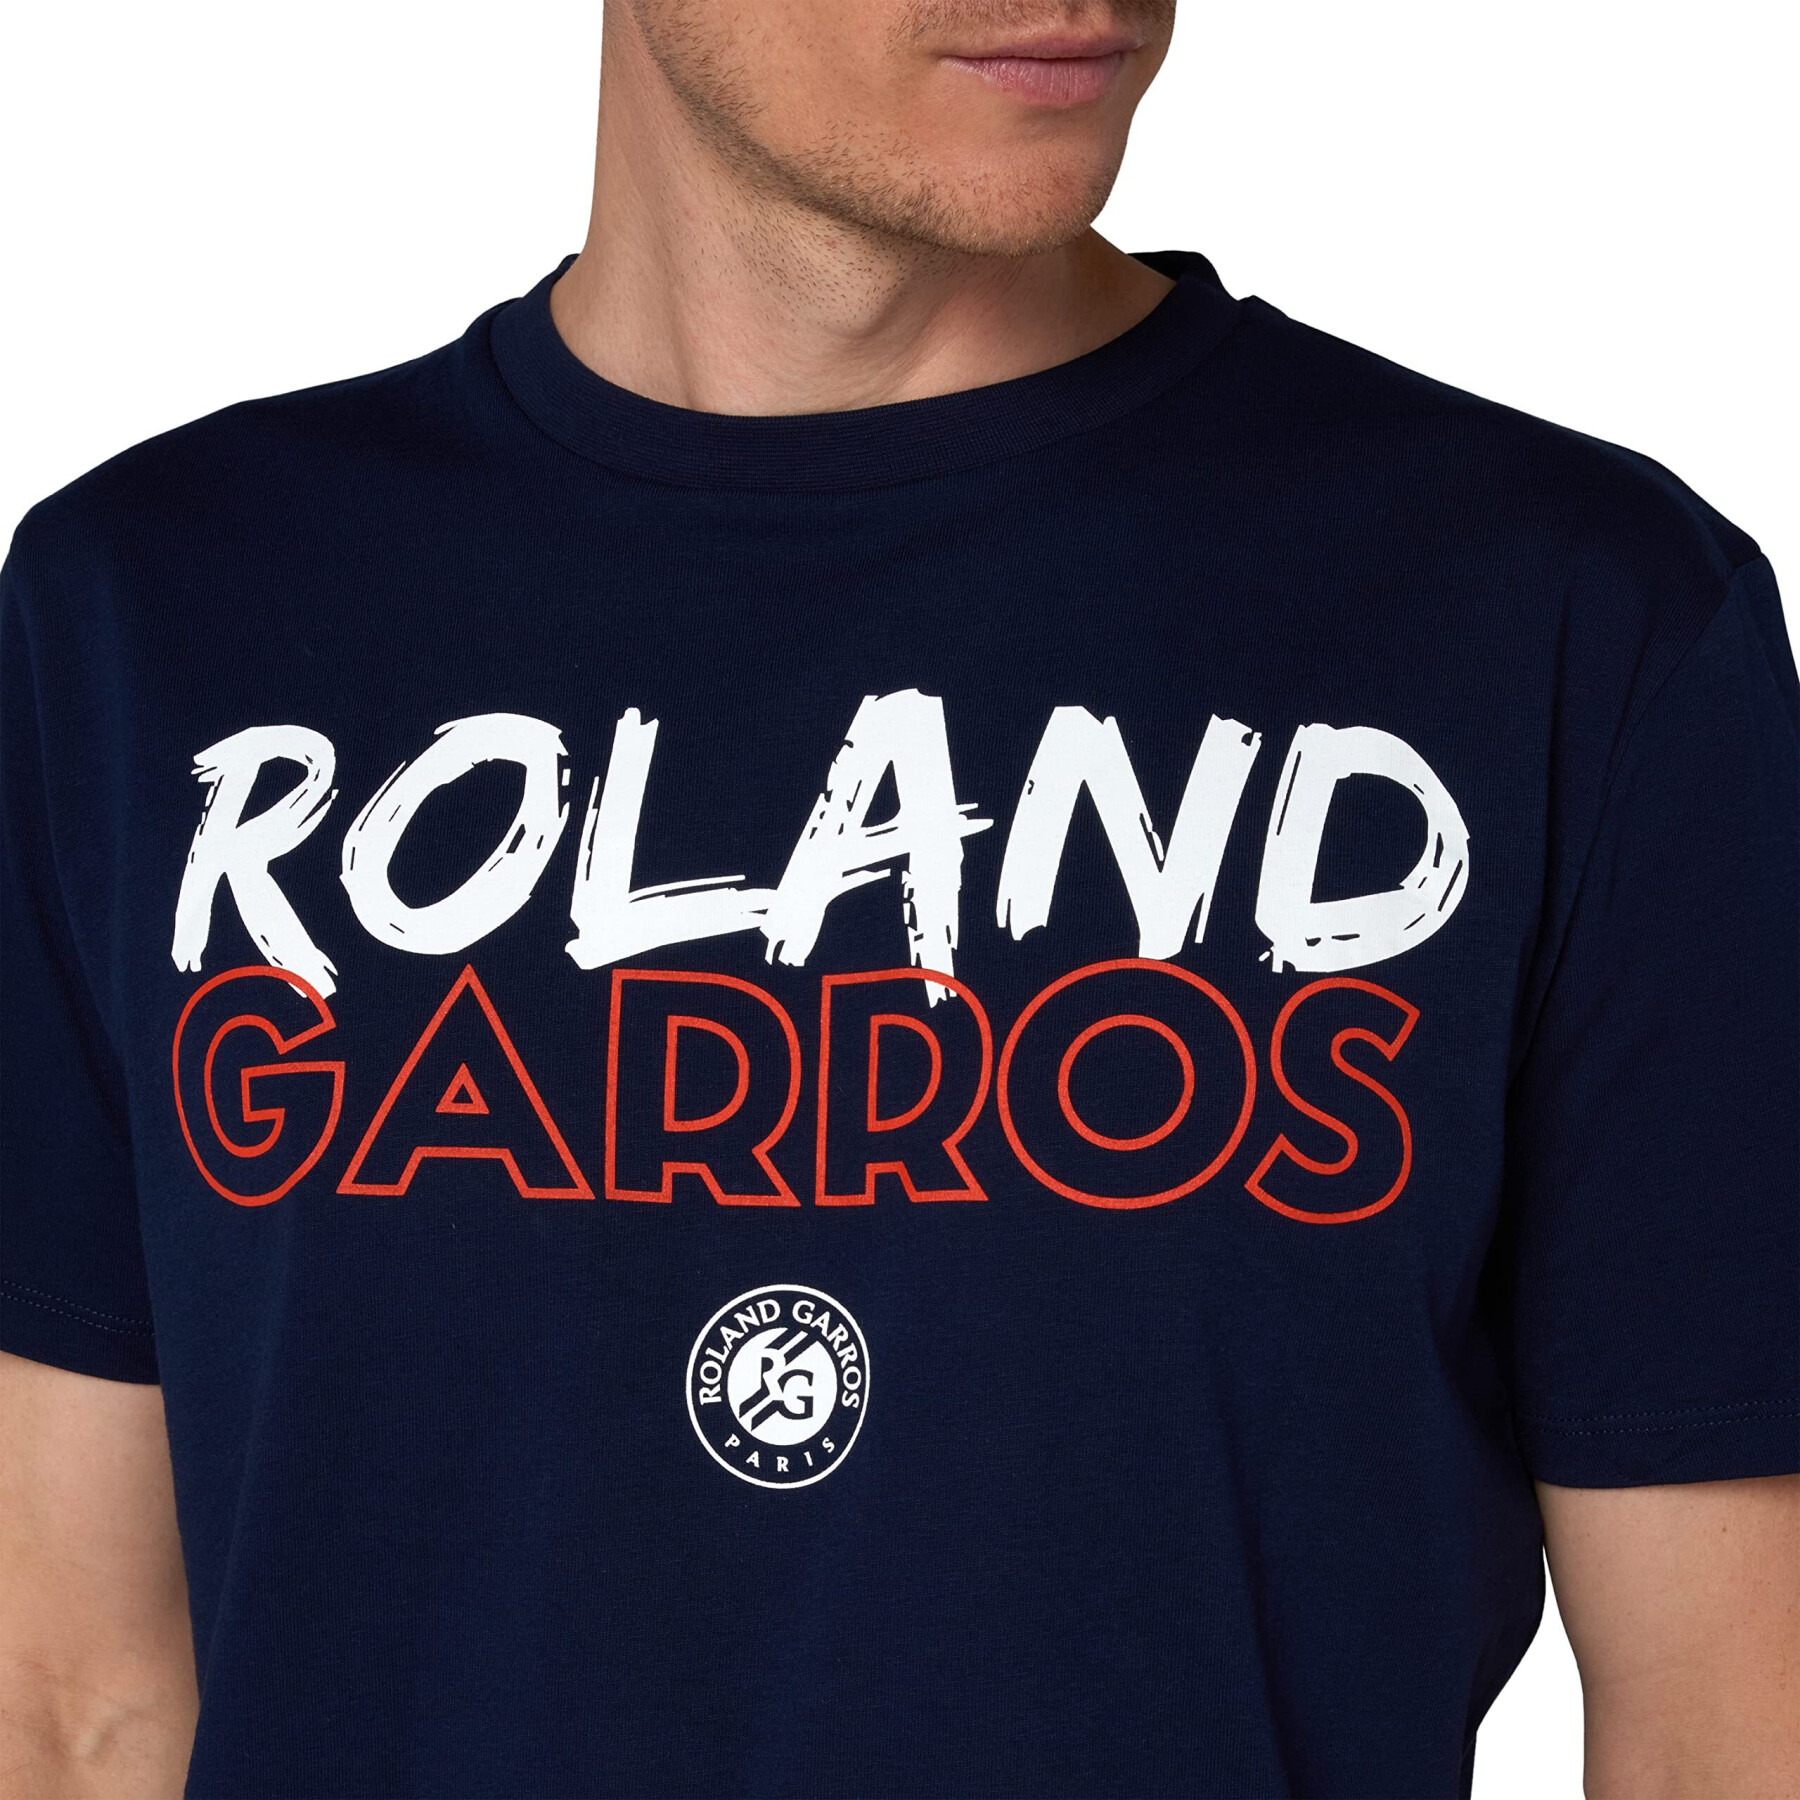 Koszulka Roland Garros